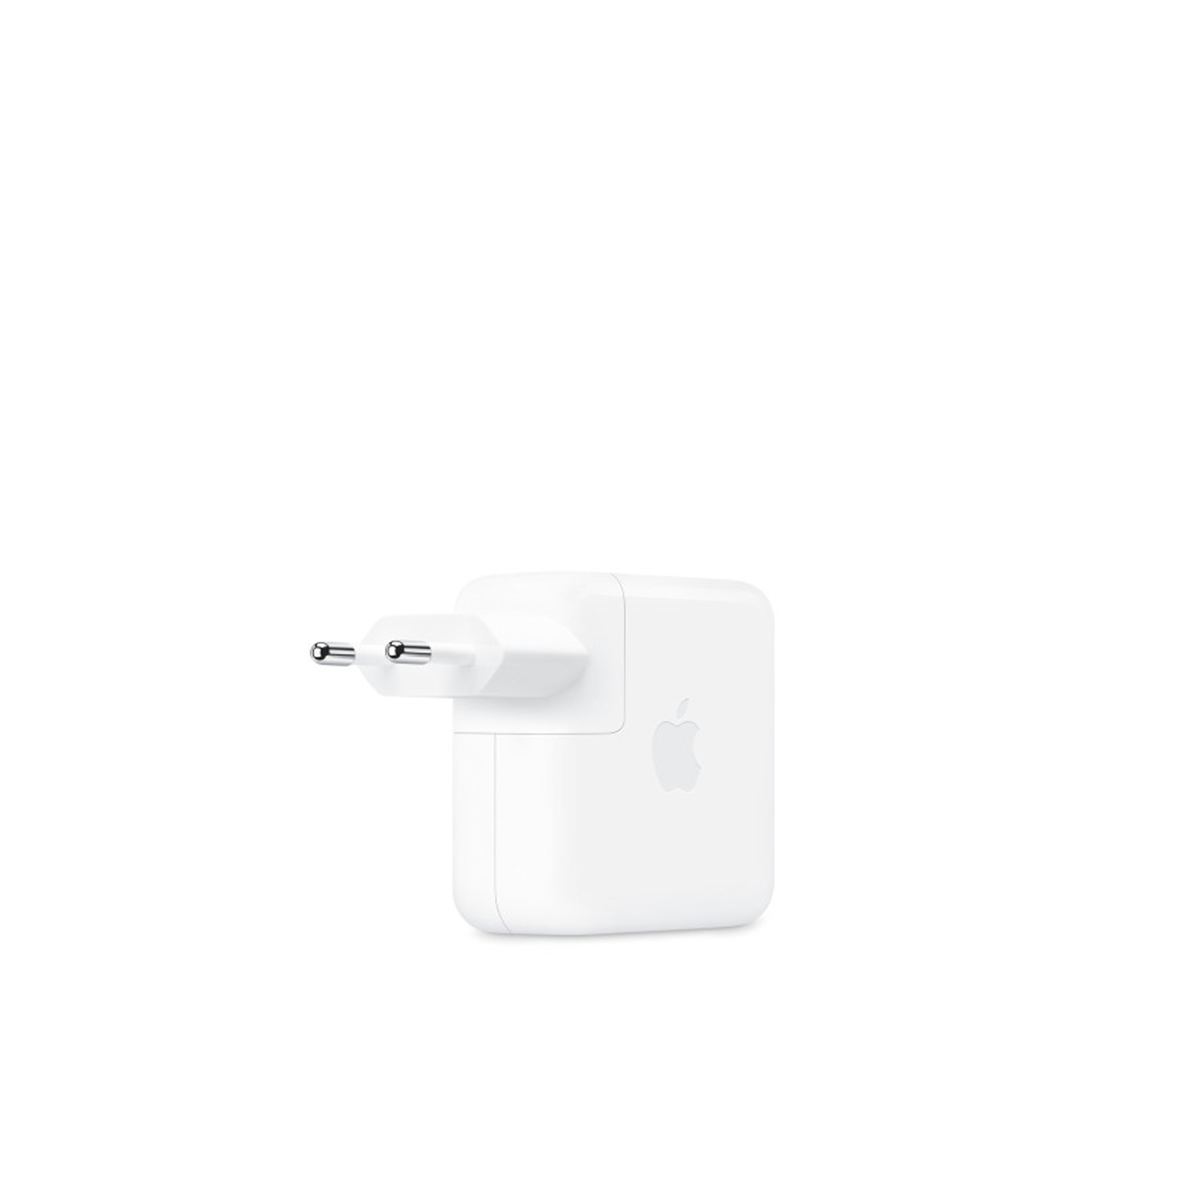  Apple 70W USB-C Power Adapter 